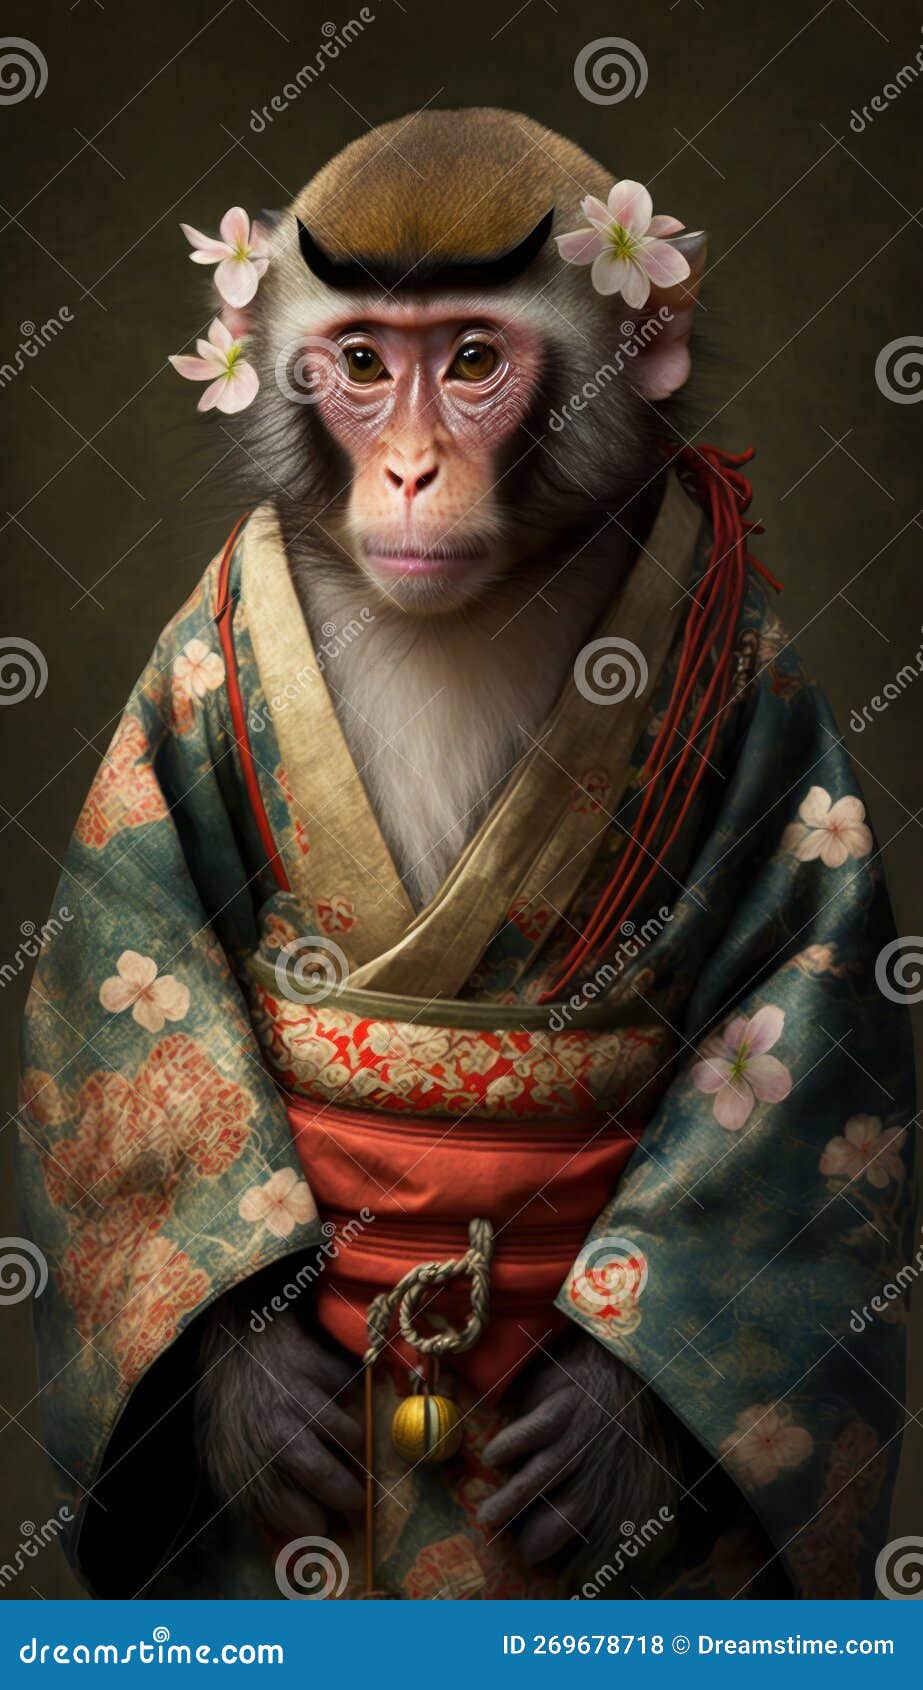 An iconic fashion photoshoot of a monkey modeling trendy clothing